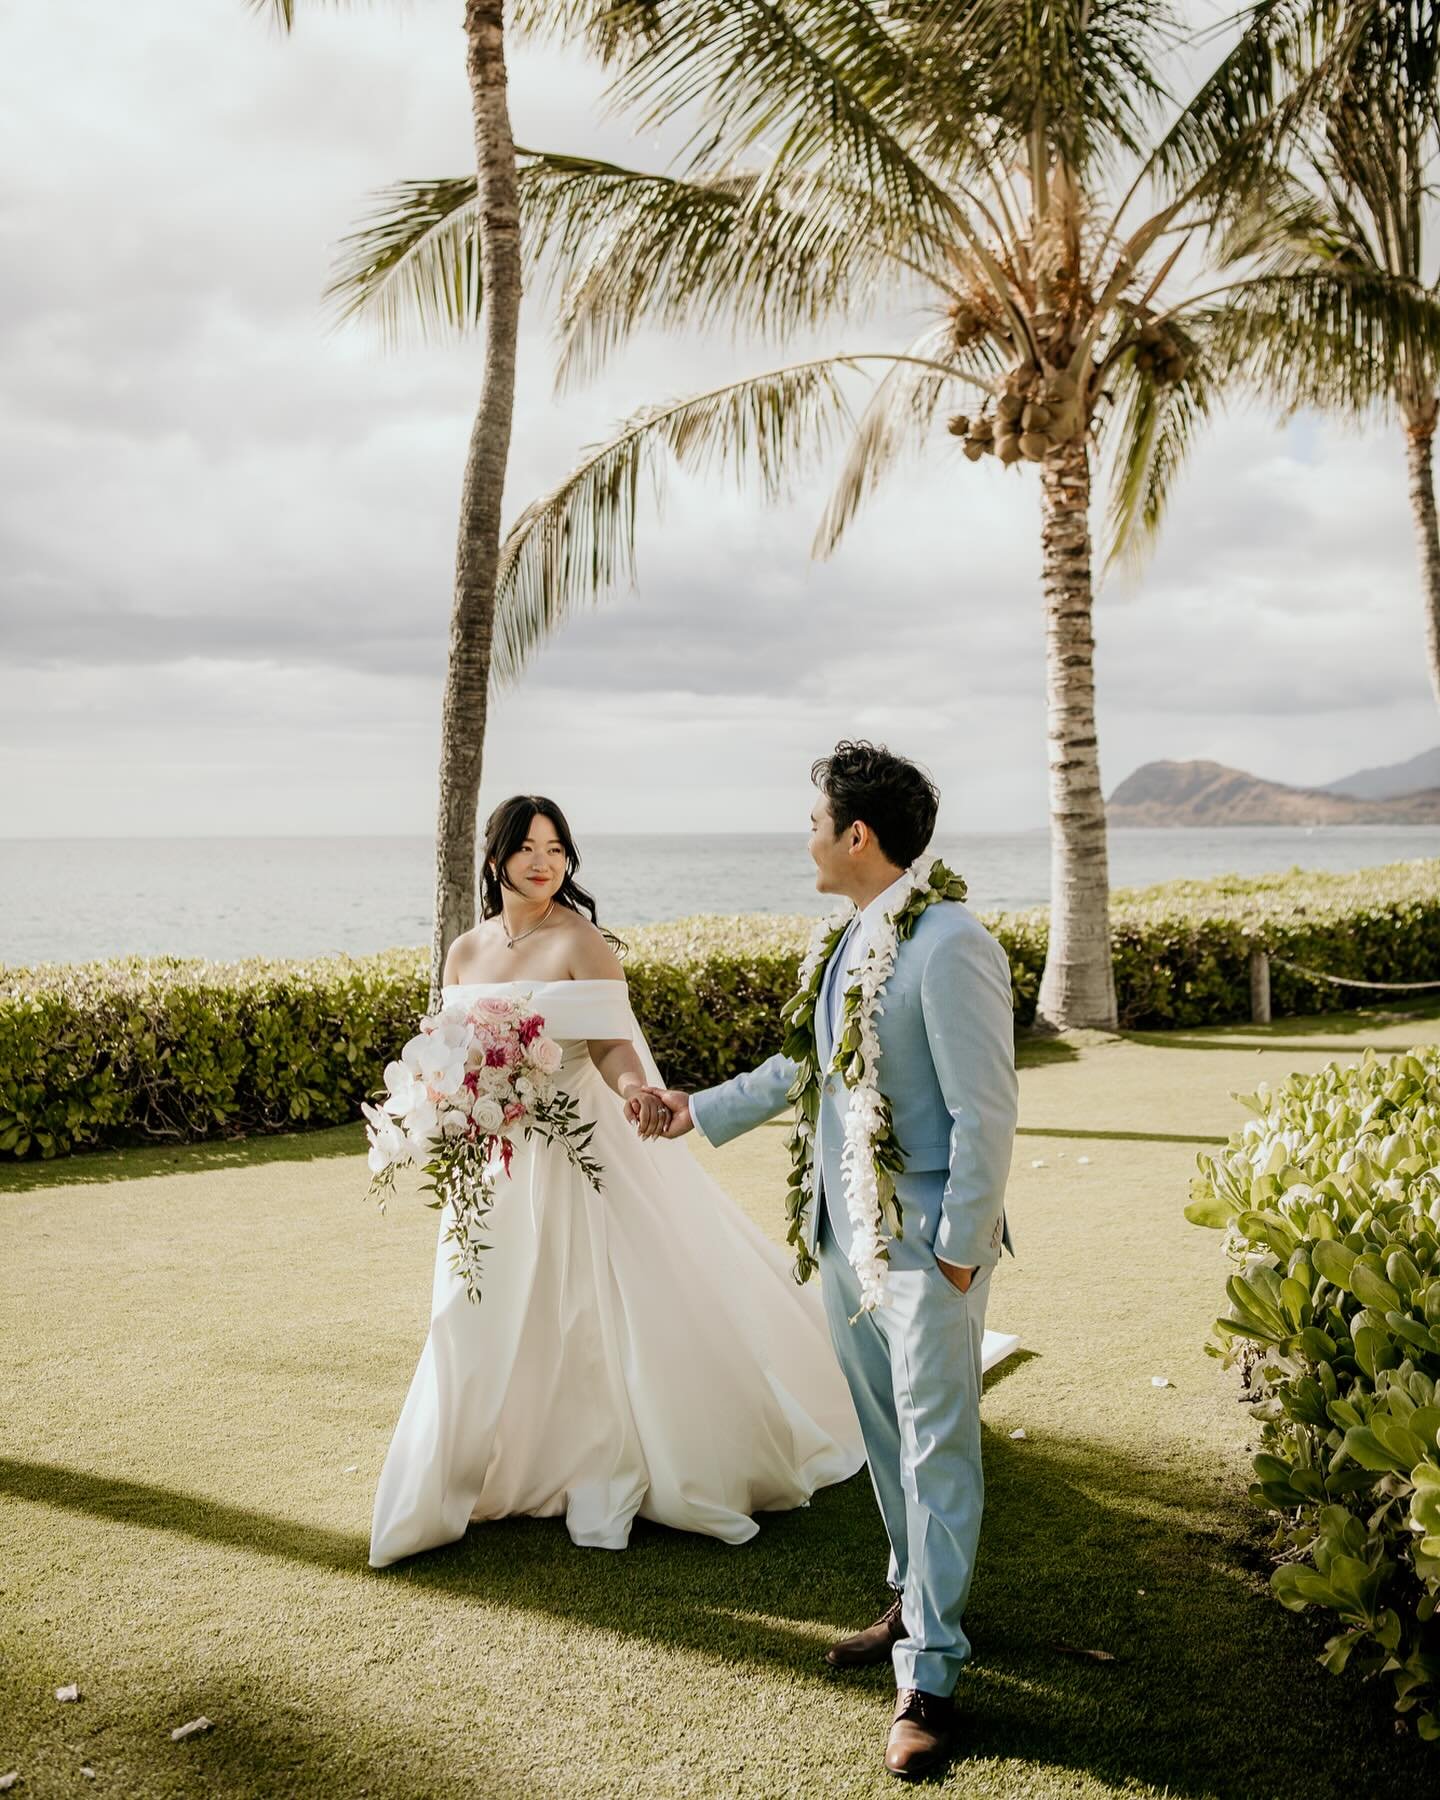 Oahu weddings just hit different

Event Design &amp; Coordination @whiteorchidwedding 
Photography @derekwongphotography 
Florals @jadorefloralhawaii @jadorecouturehawaii 
Beauty @faceartbeauty